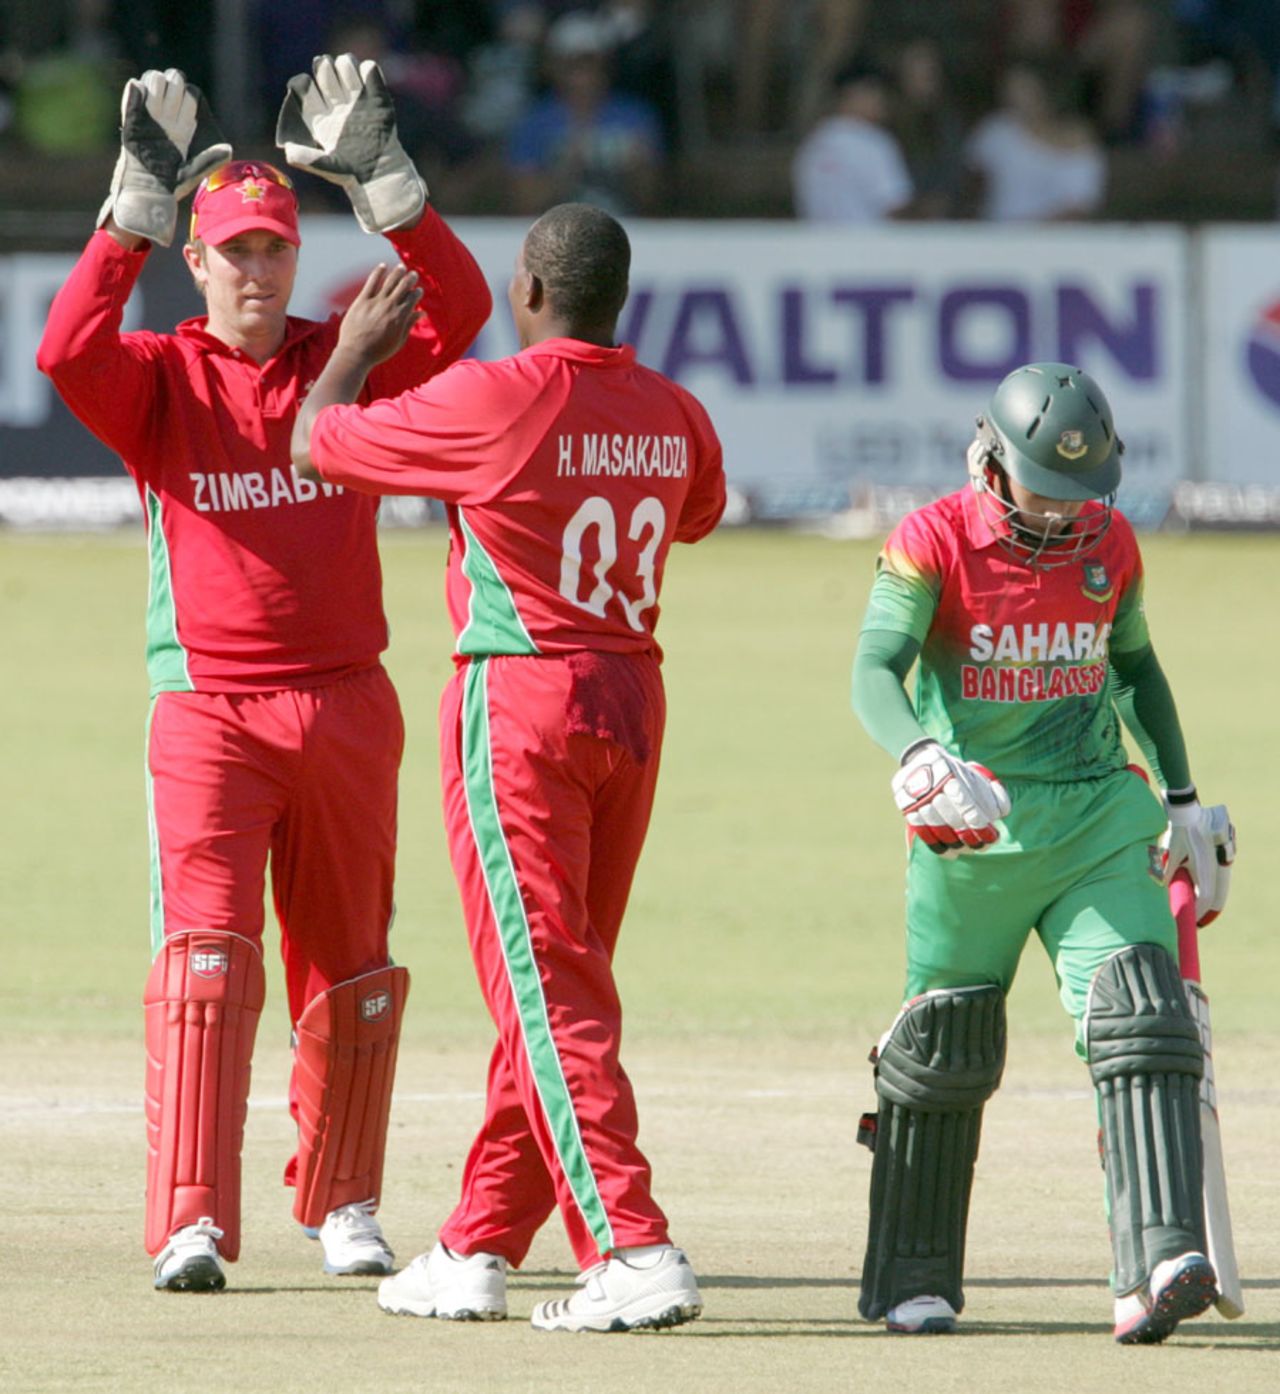 A dejected Mushfiqur Rahim walks off after being dismissed for 17, Zimbabwe v Bangladesh, 2nd T20I, Bulawayo, May 12, 2013